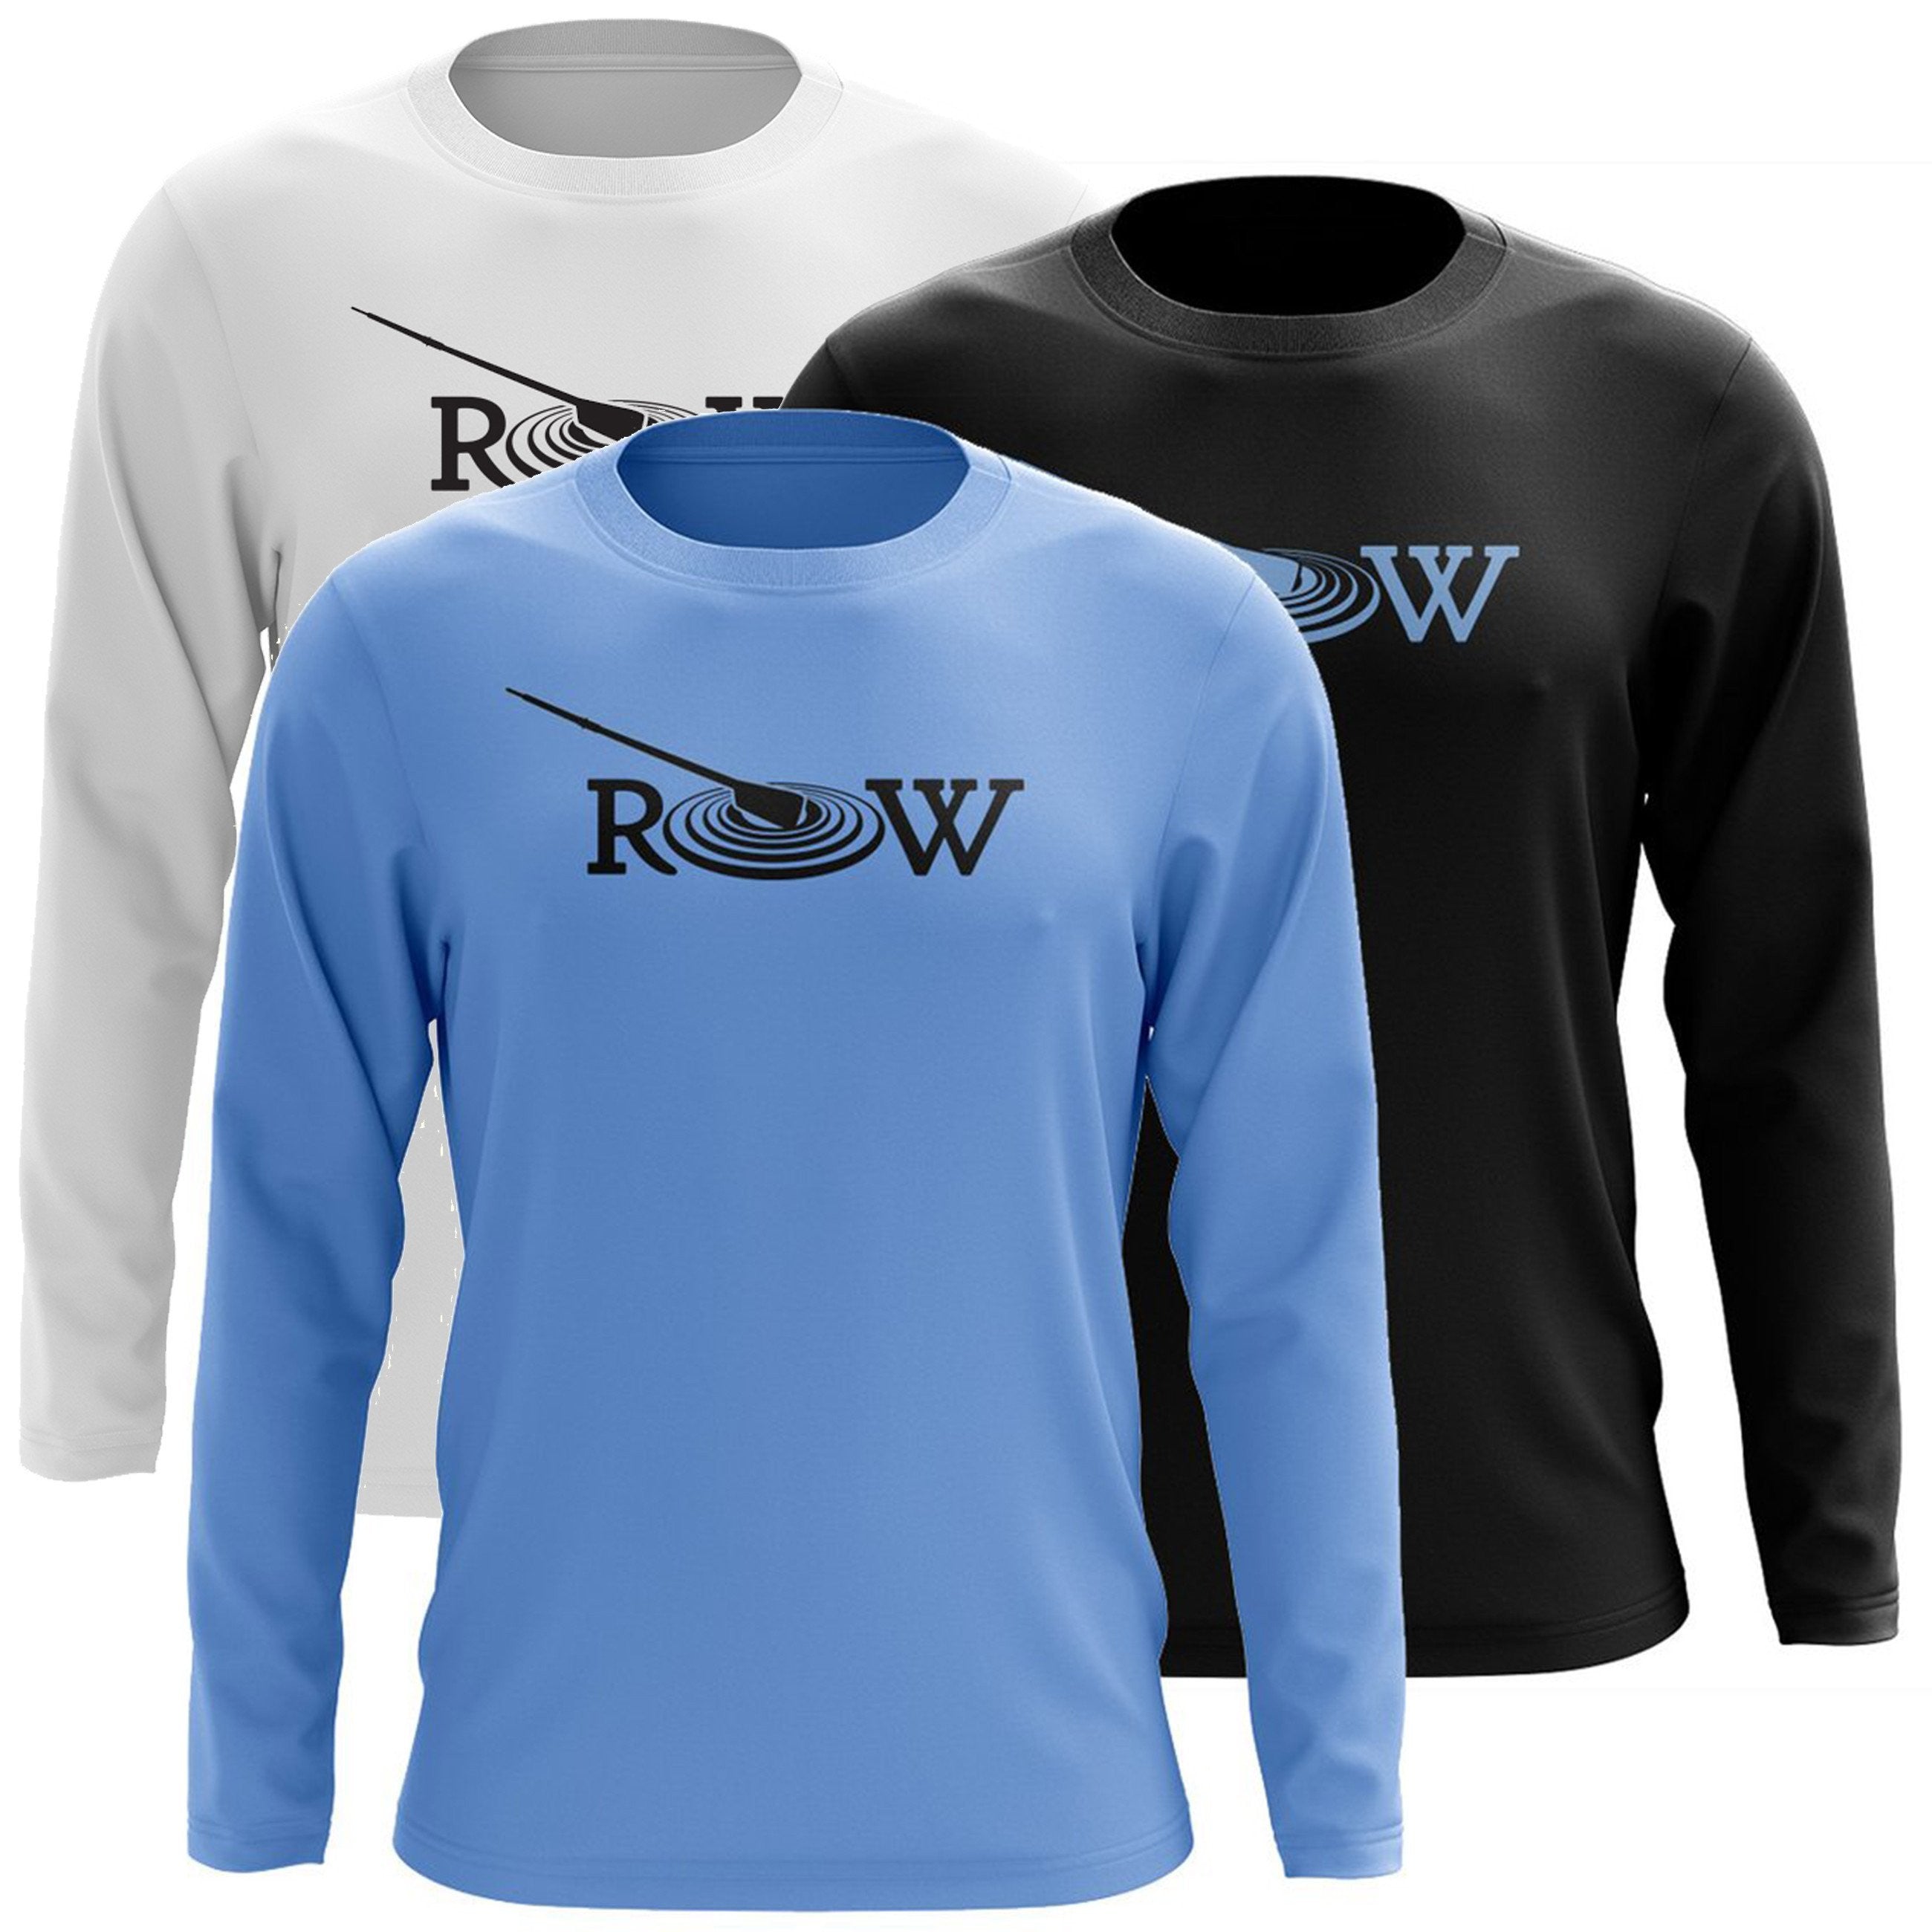 Custom R.O.W. Long Sleeve Cotton T-Shirt